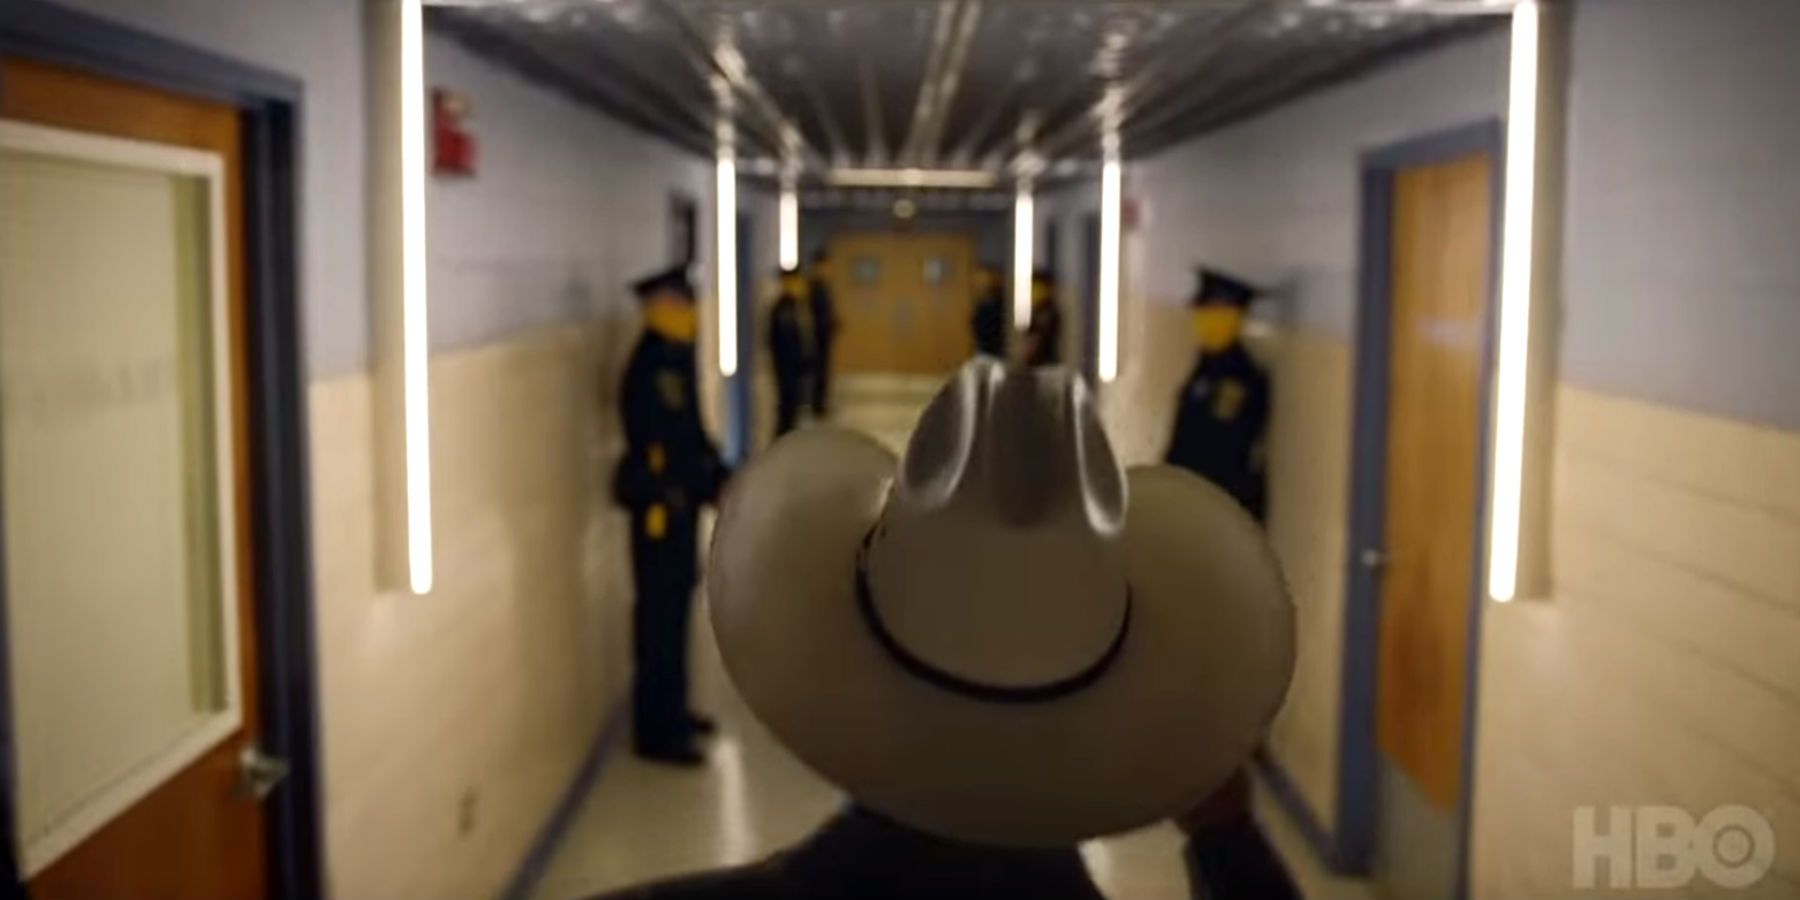 HBO Watchmen - Cowboy Hat